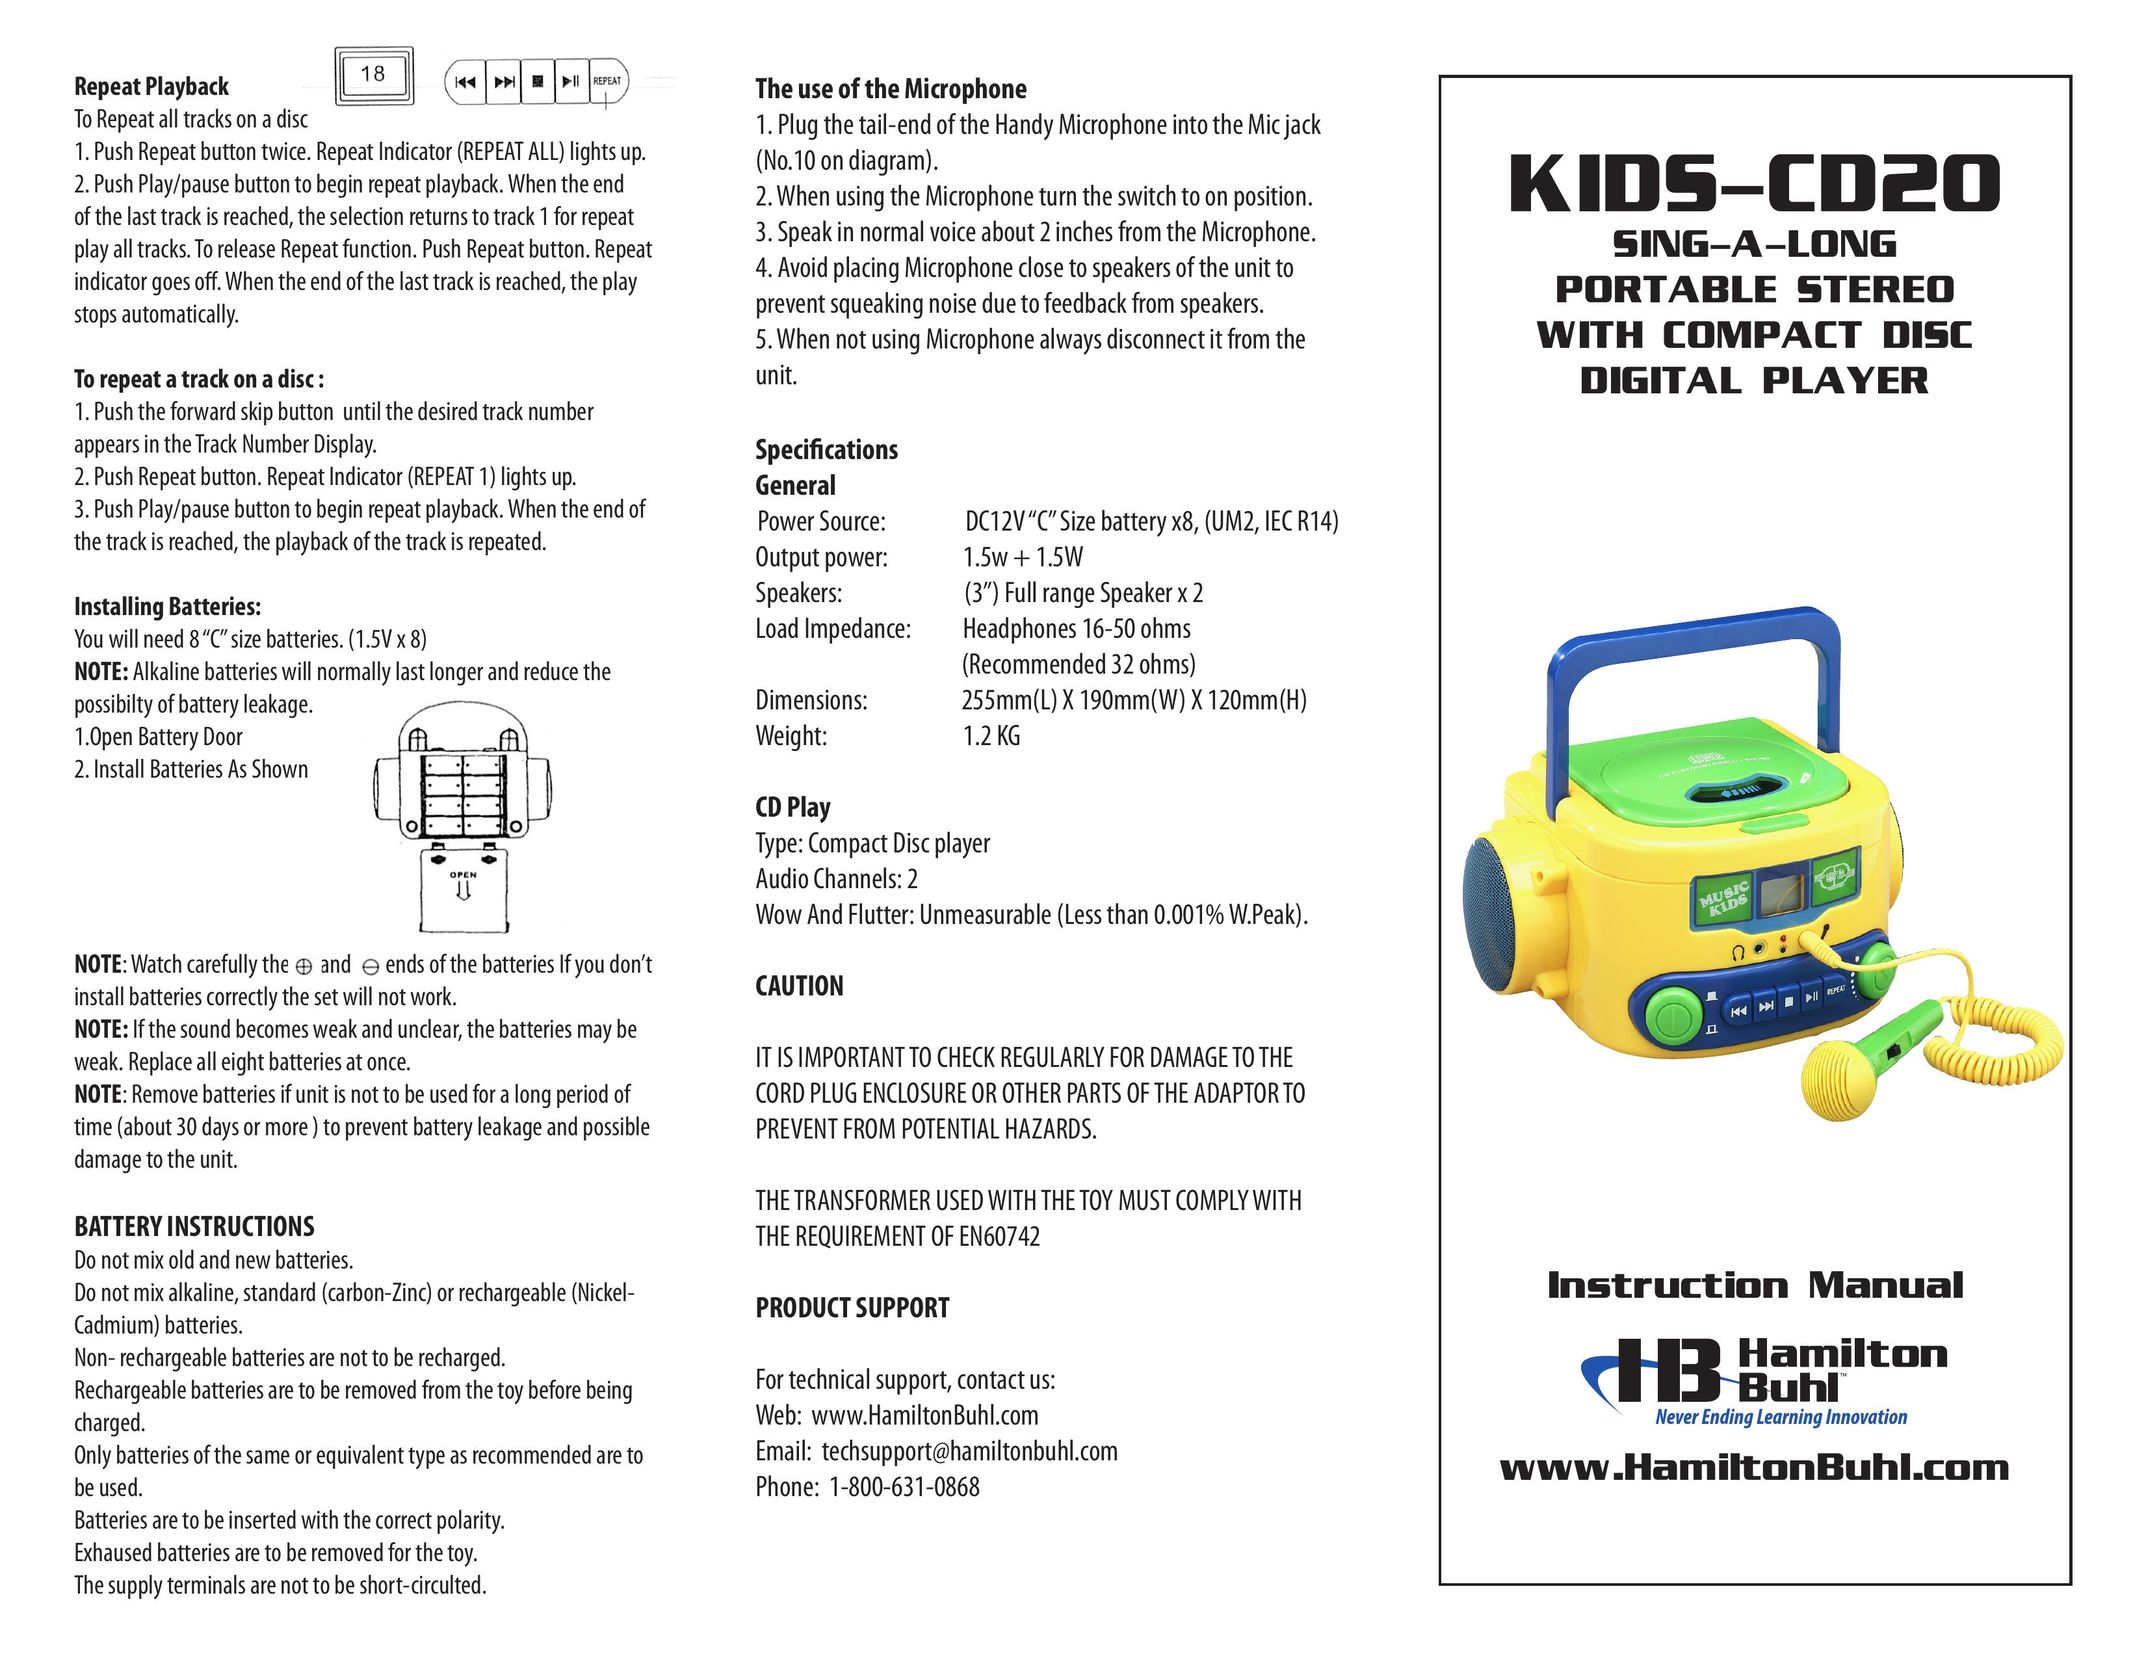 Hamilton Electronics KIDS-CD20 CD Player User Manual